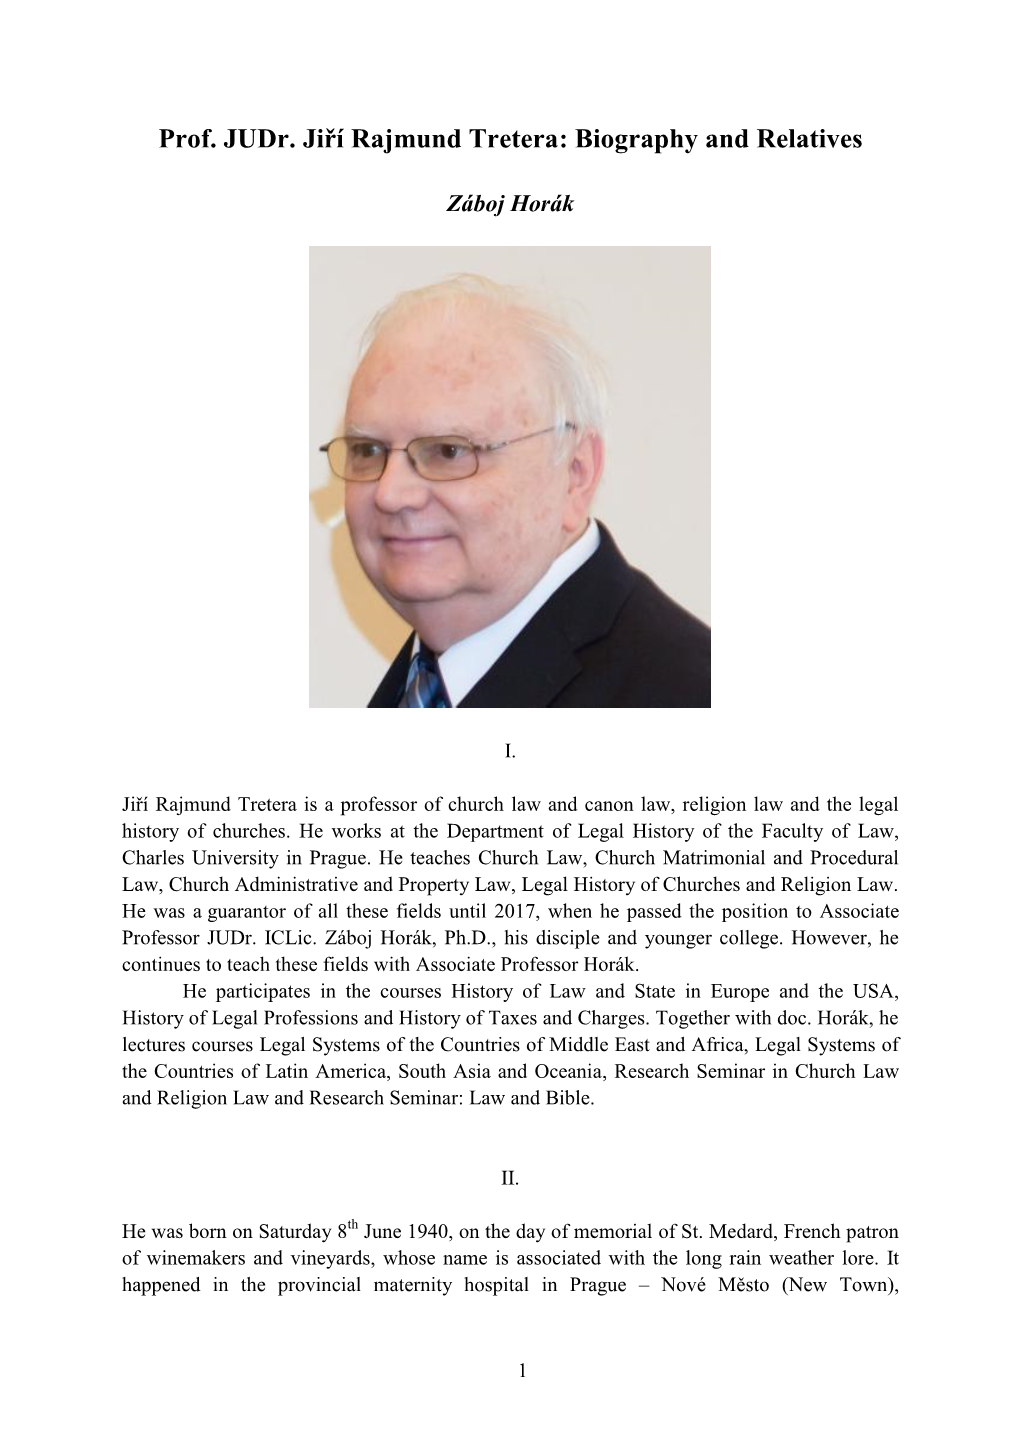 Prof. Judr. Jiří Rajmund Tretera: Biography and Relatives